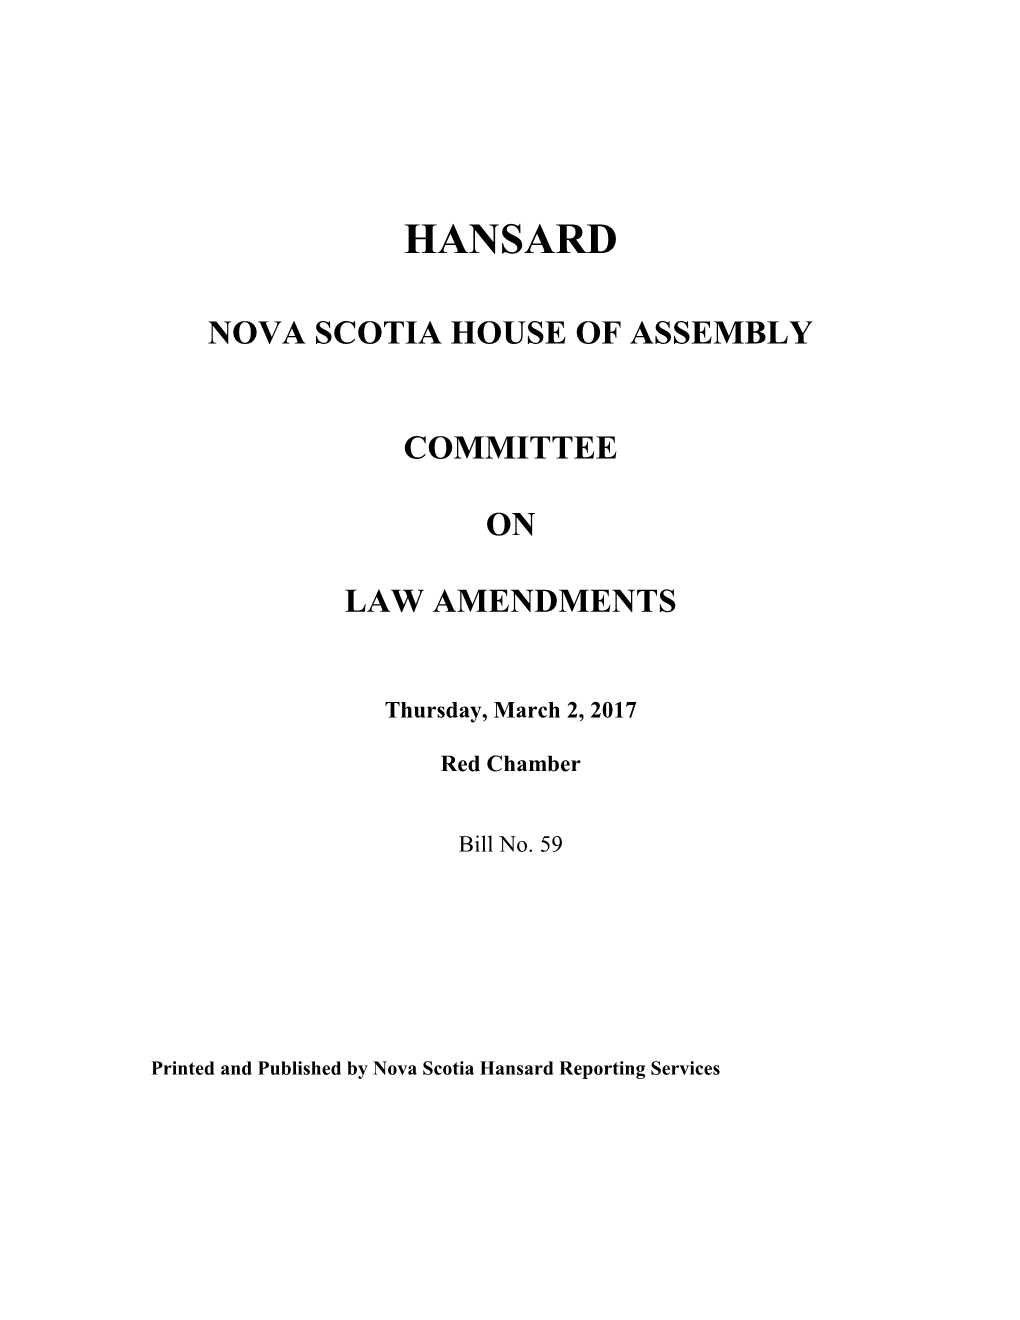 Law Amendments - Red Chamber (2090)